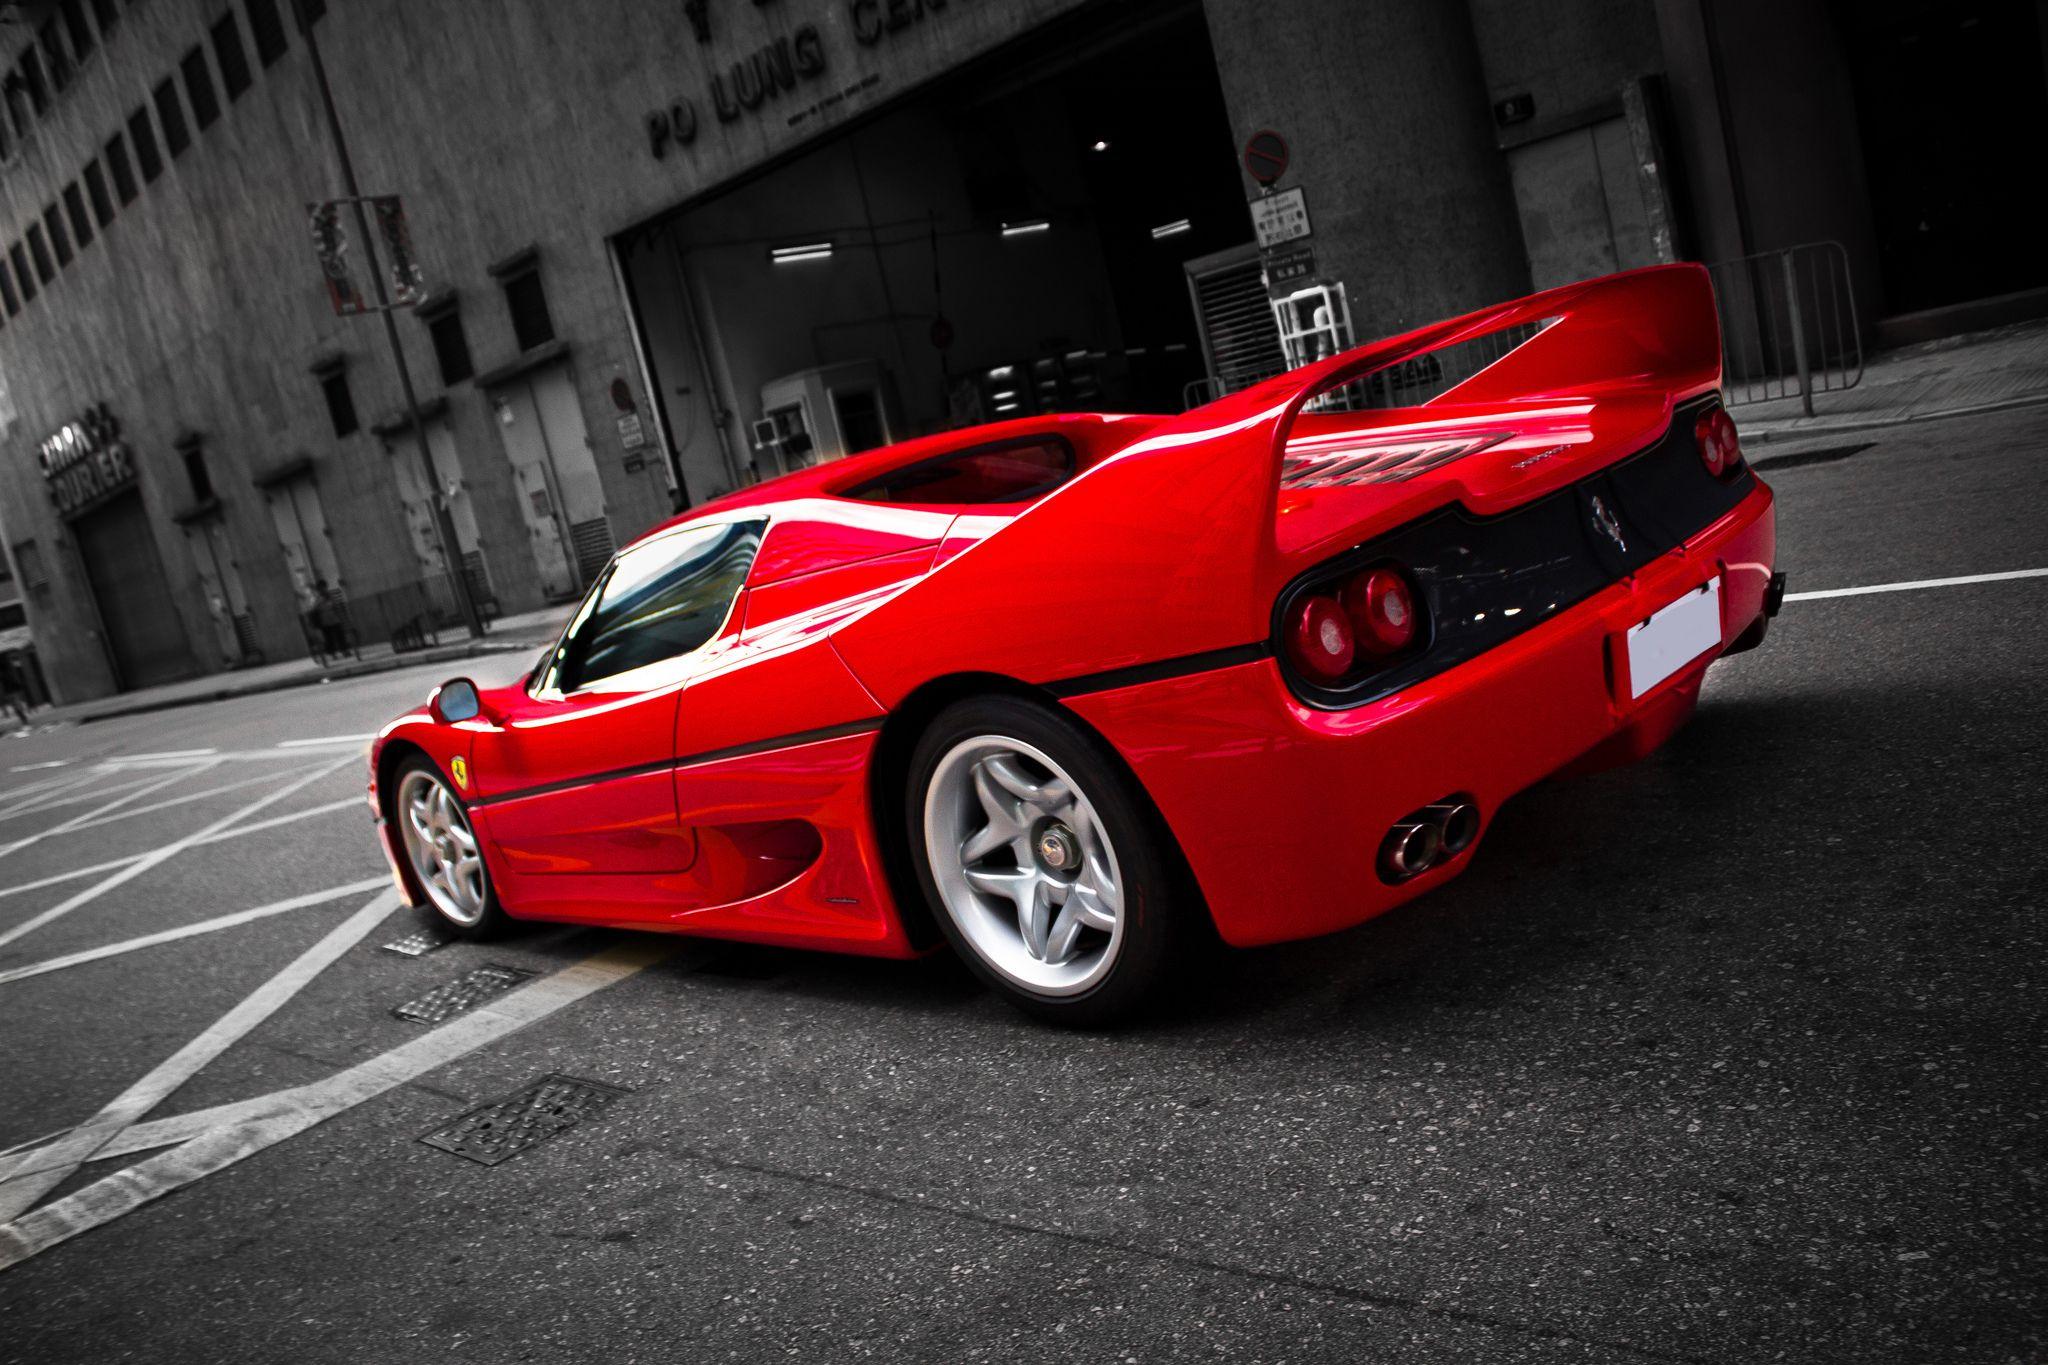 Ferrari F50 HD Wallpaper and Background Image